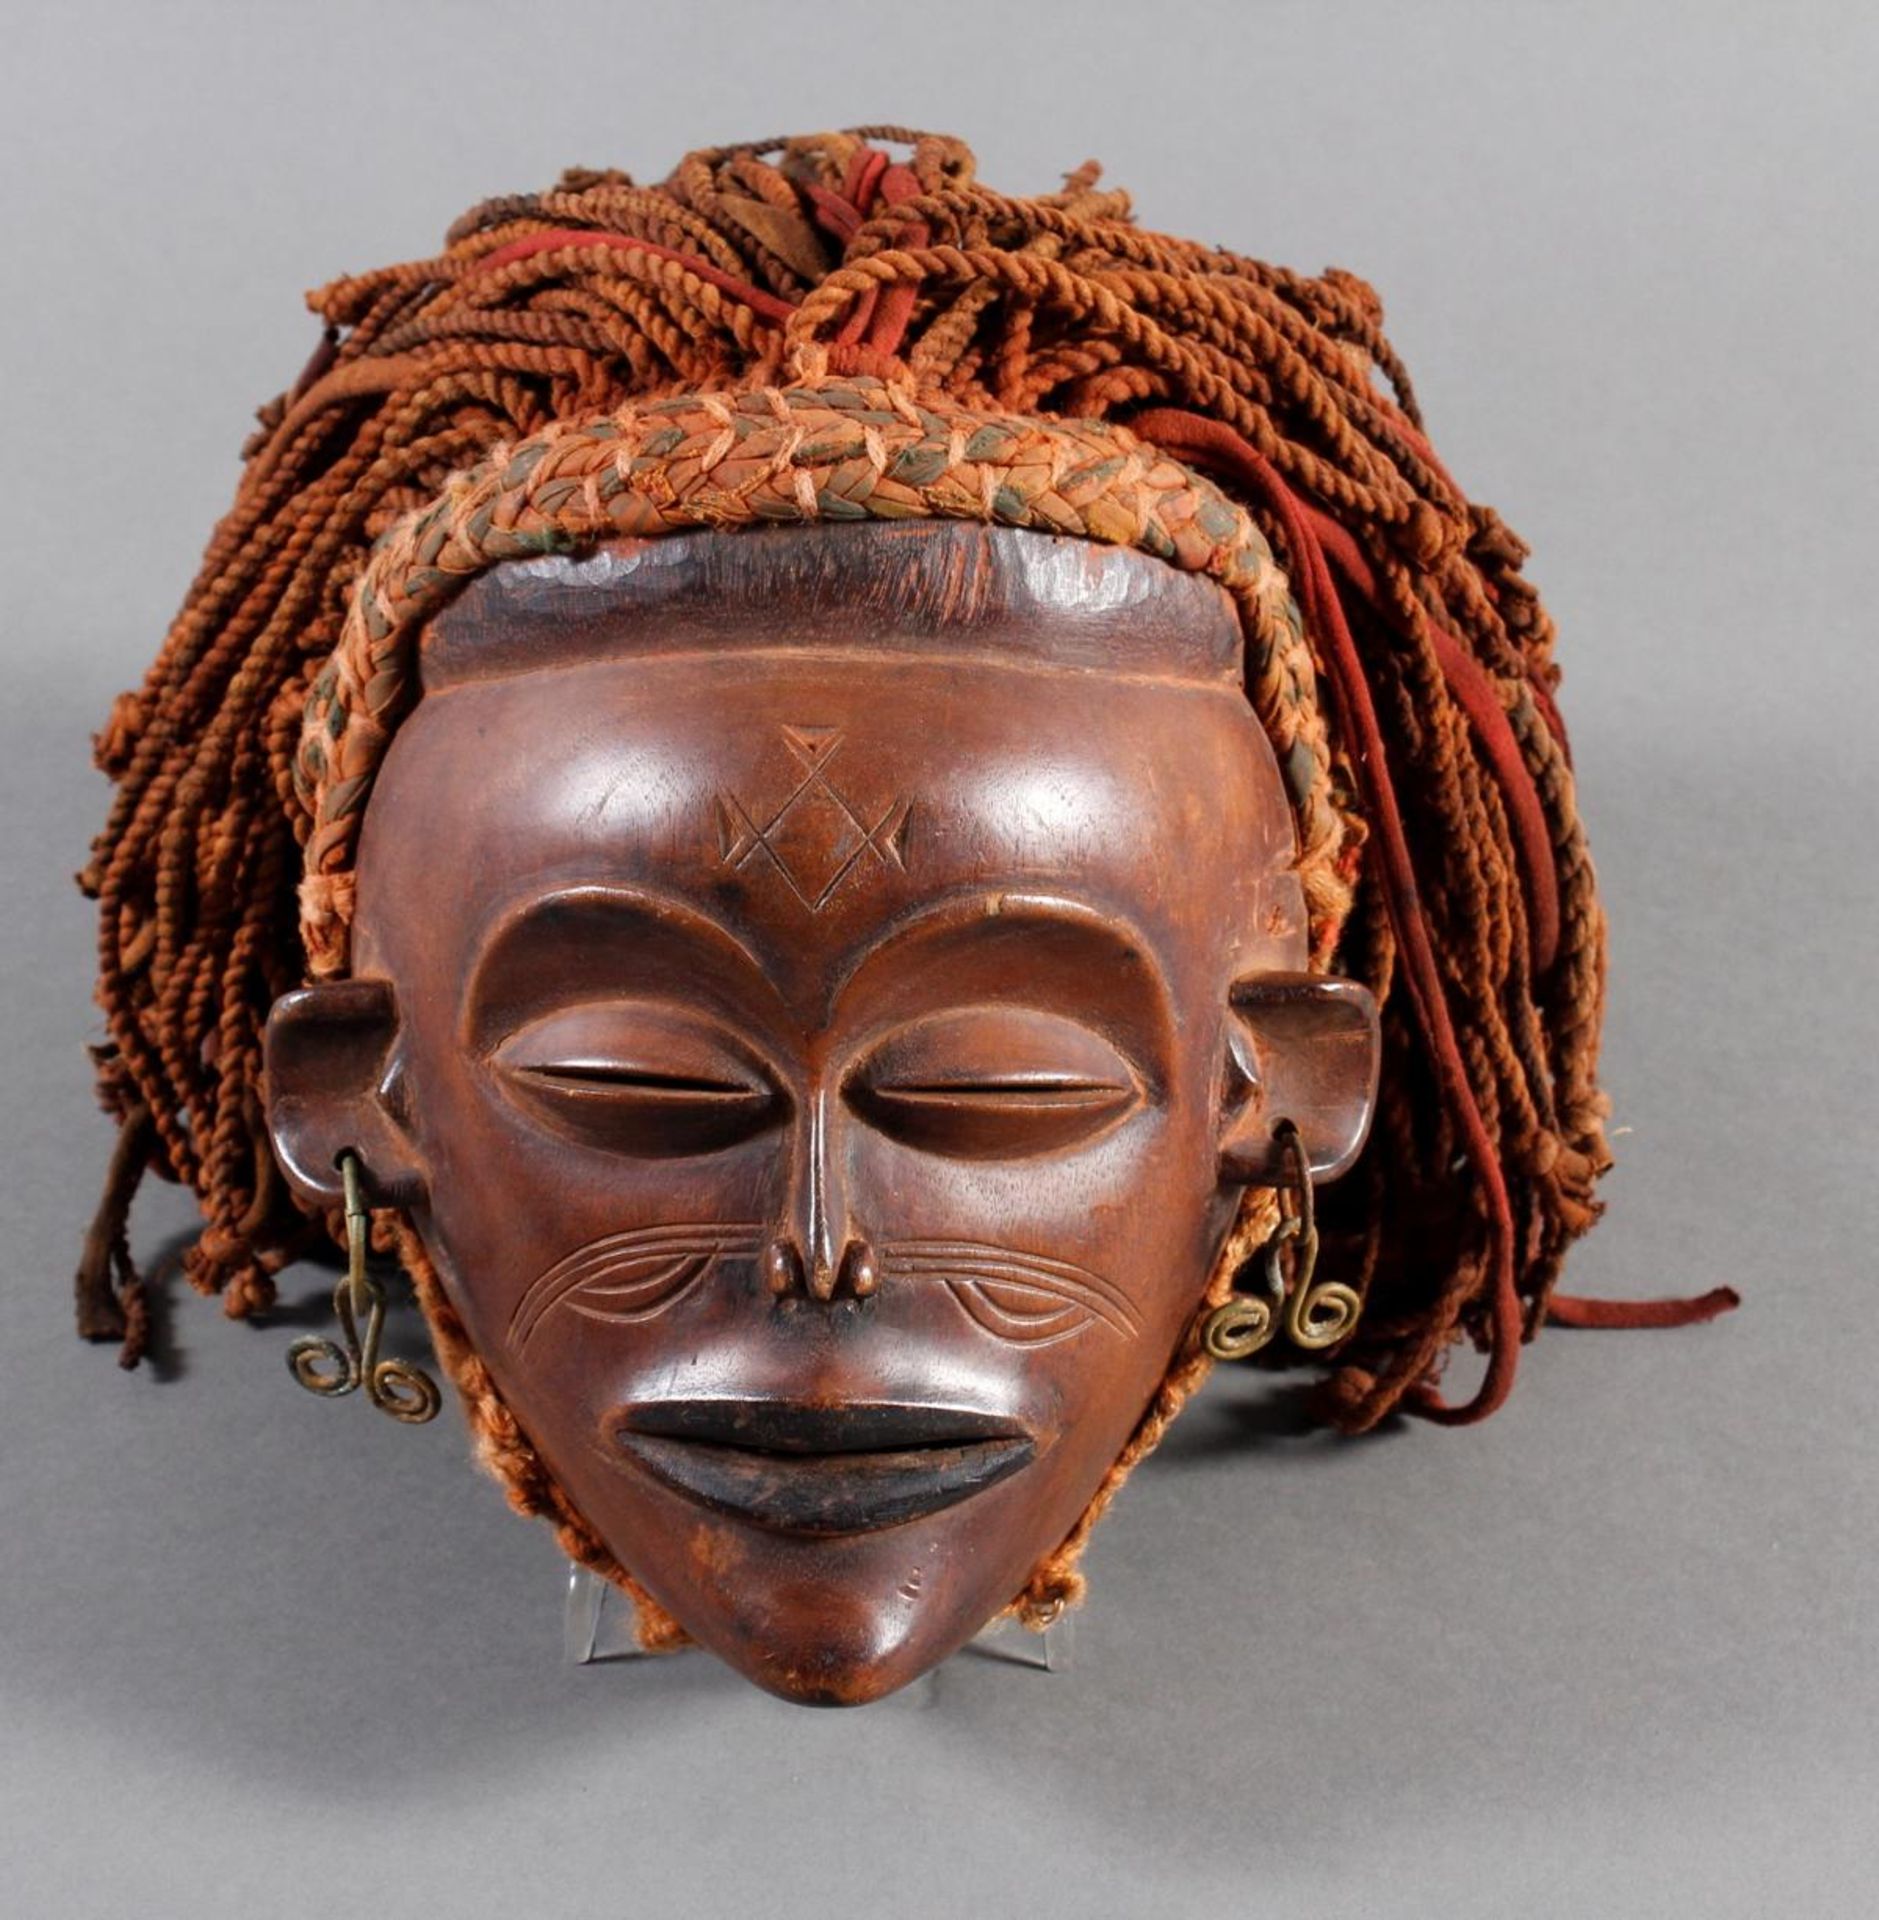 Kopfaufsatzmaske, Chokwe / Angola